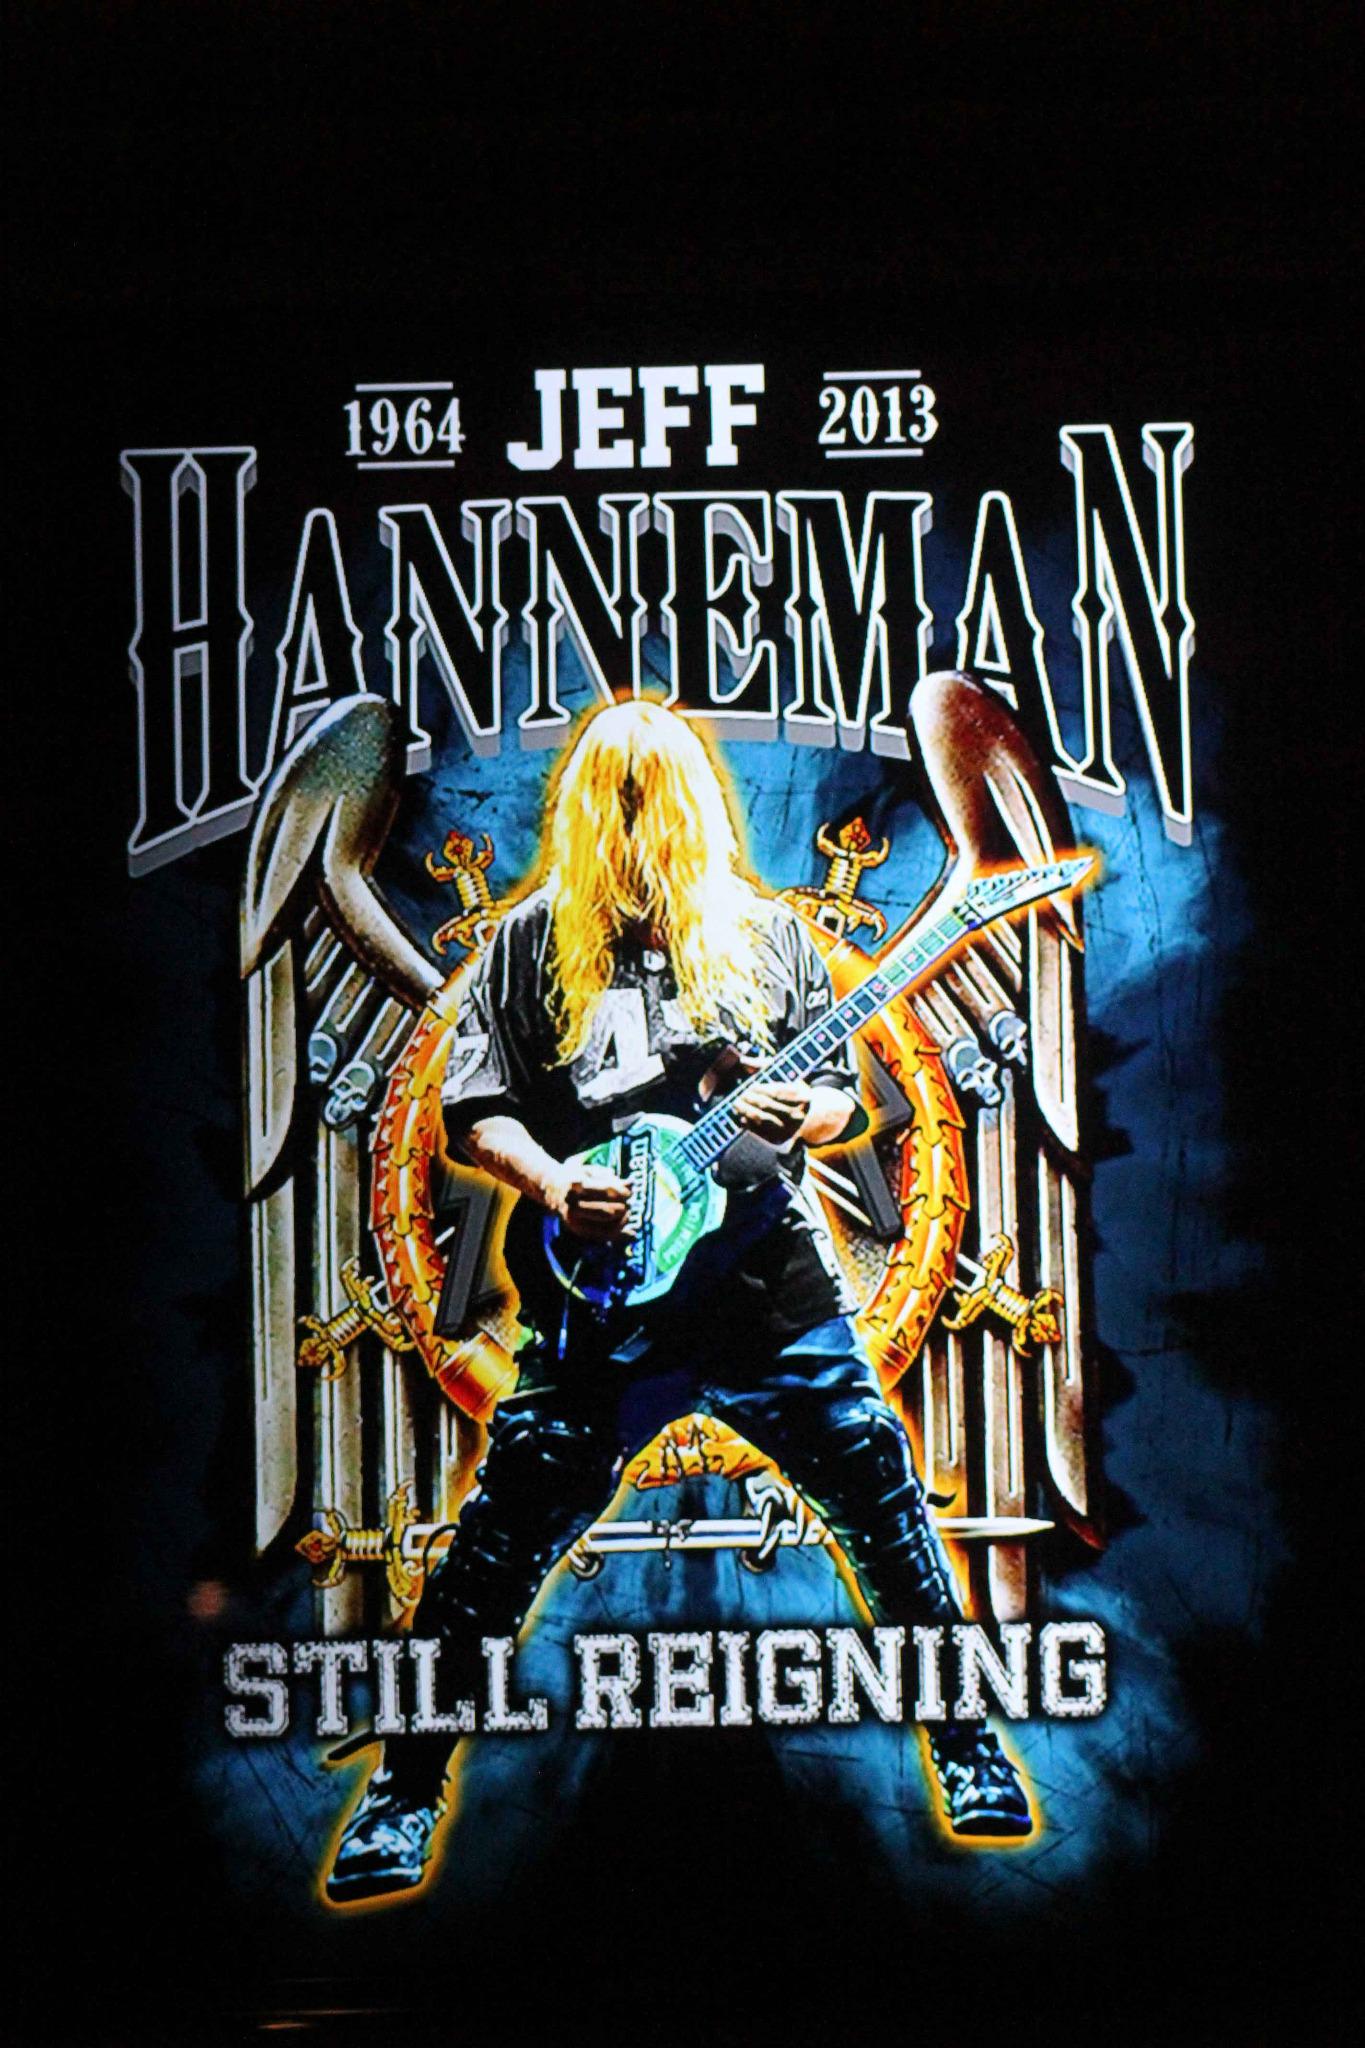 Happy Birthday to the best metal guitarist, the late Jeff Hanneman.  